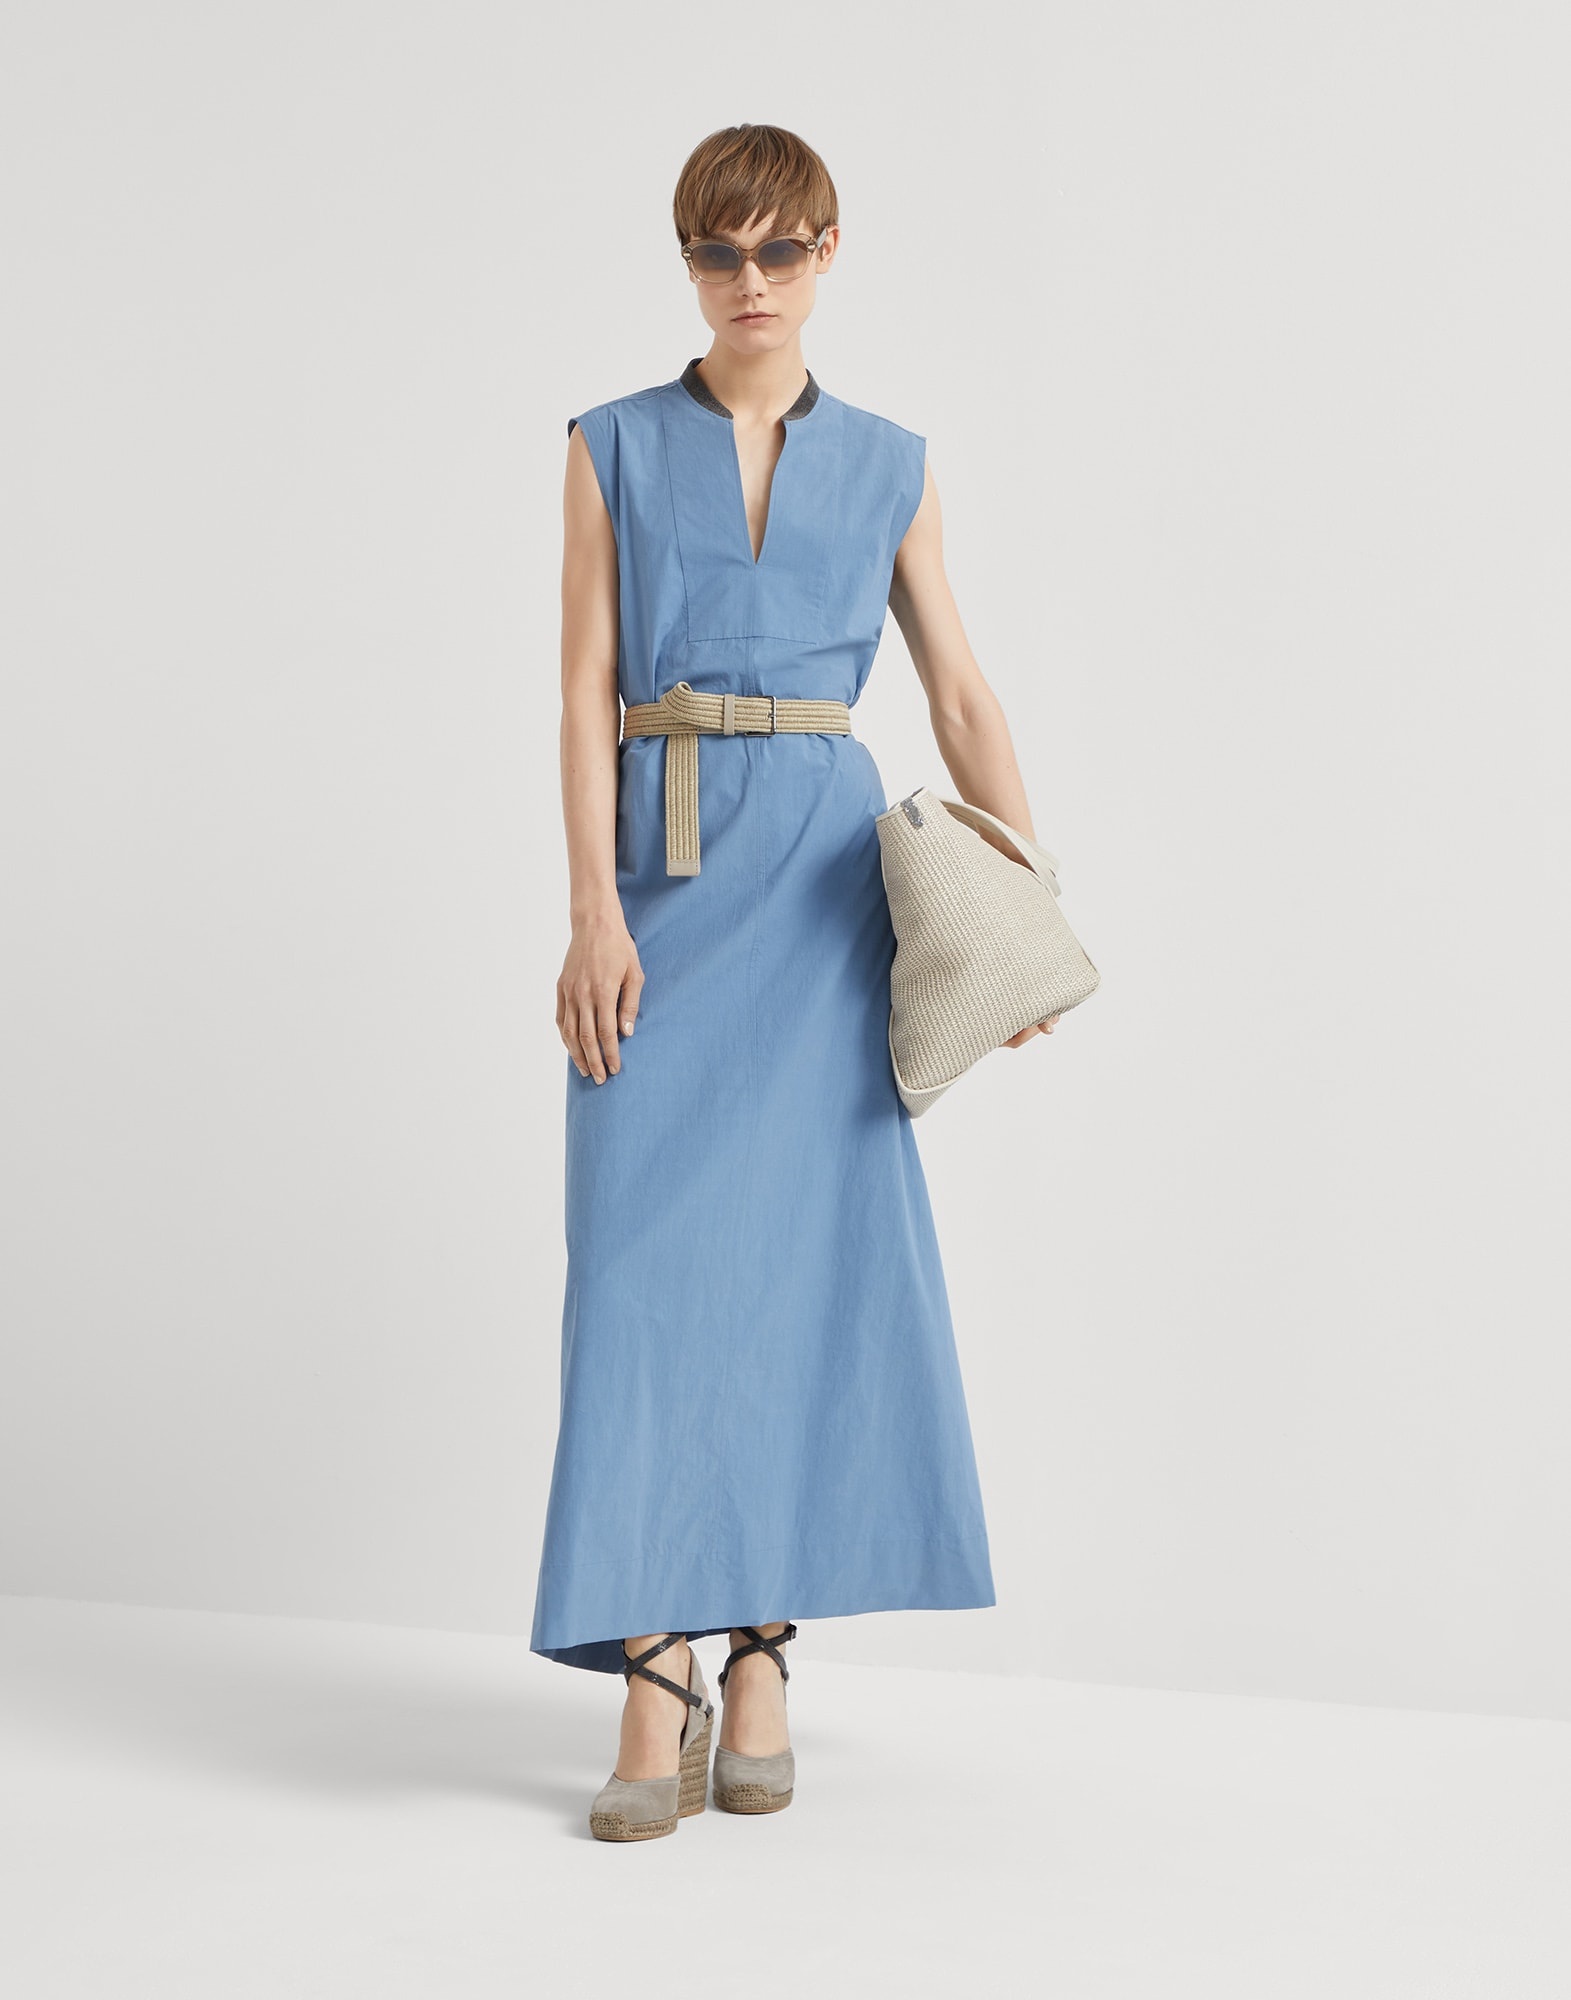 Lightweight wrinkled cotton poplin dress with raffia belt and precious neckline - 5